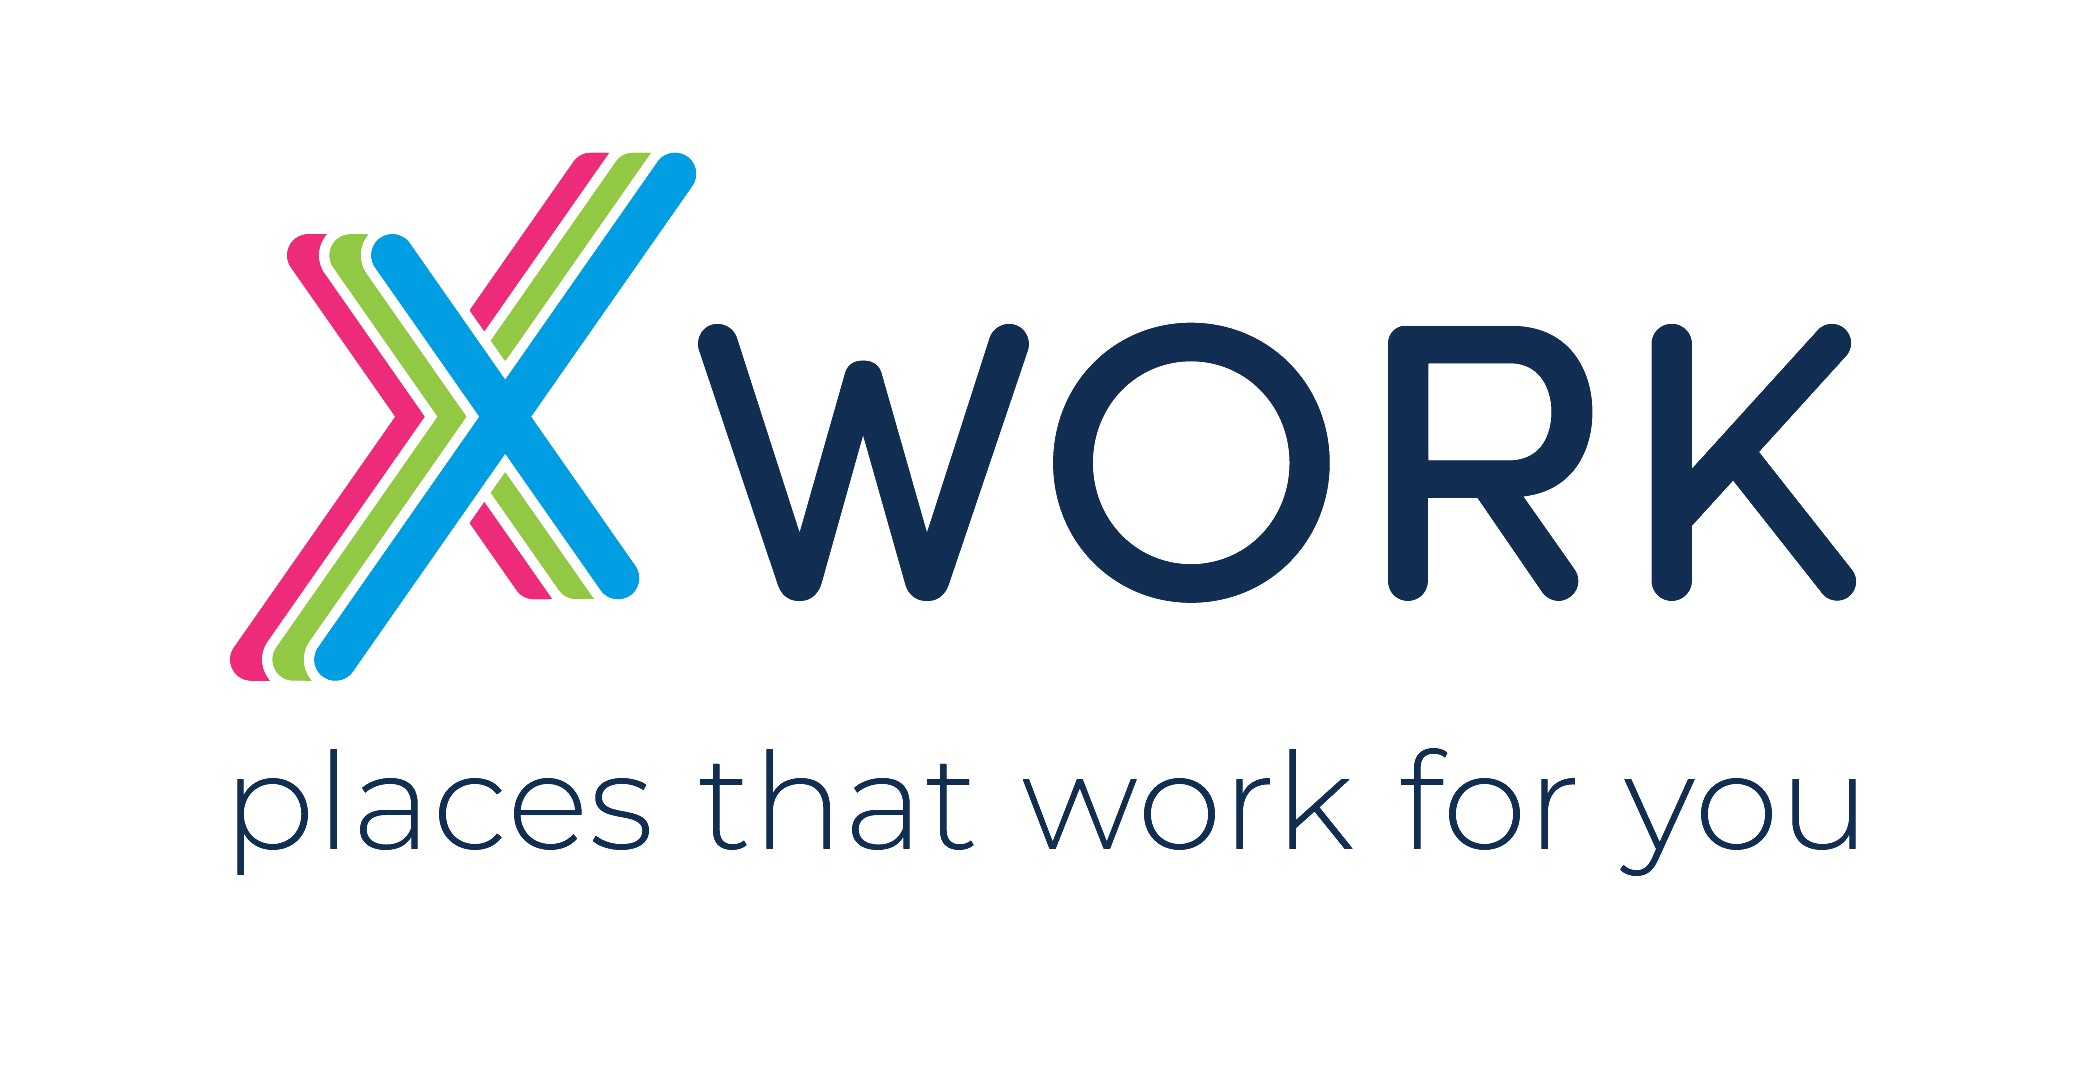 XWork logo